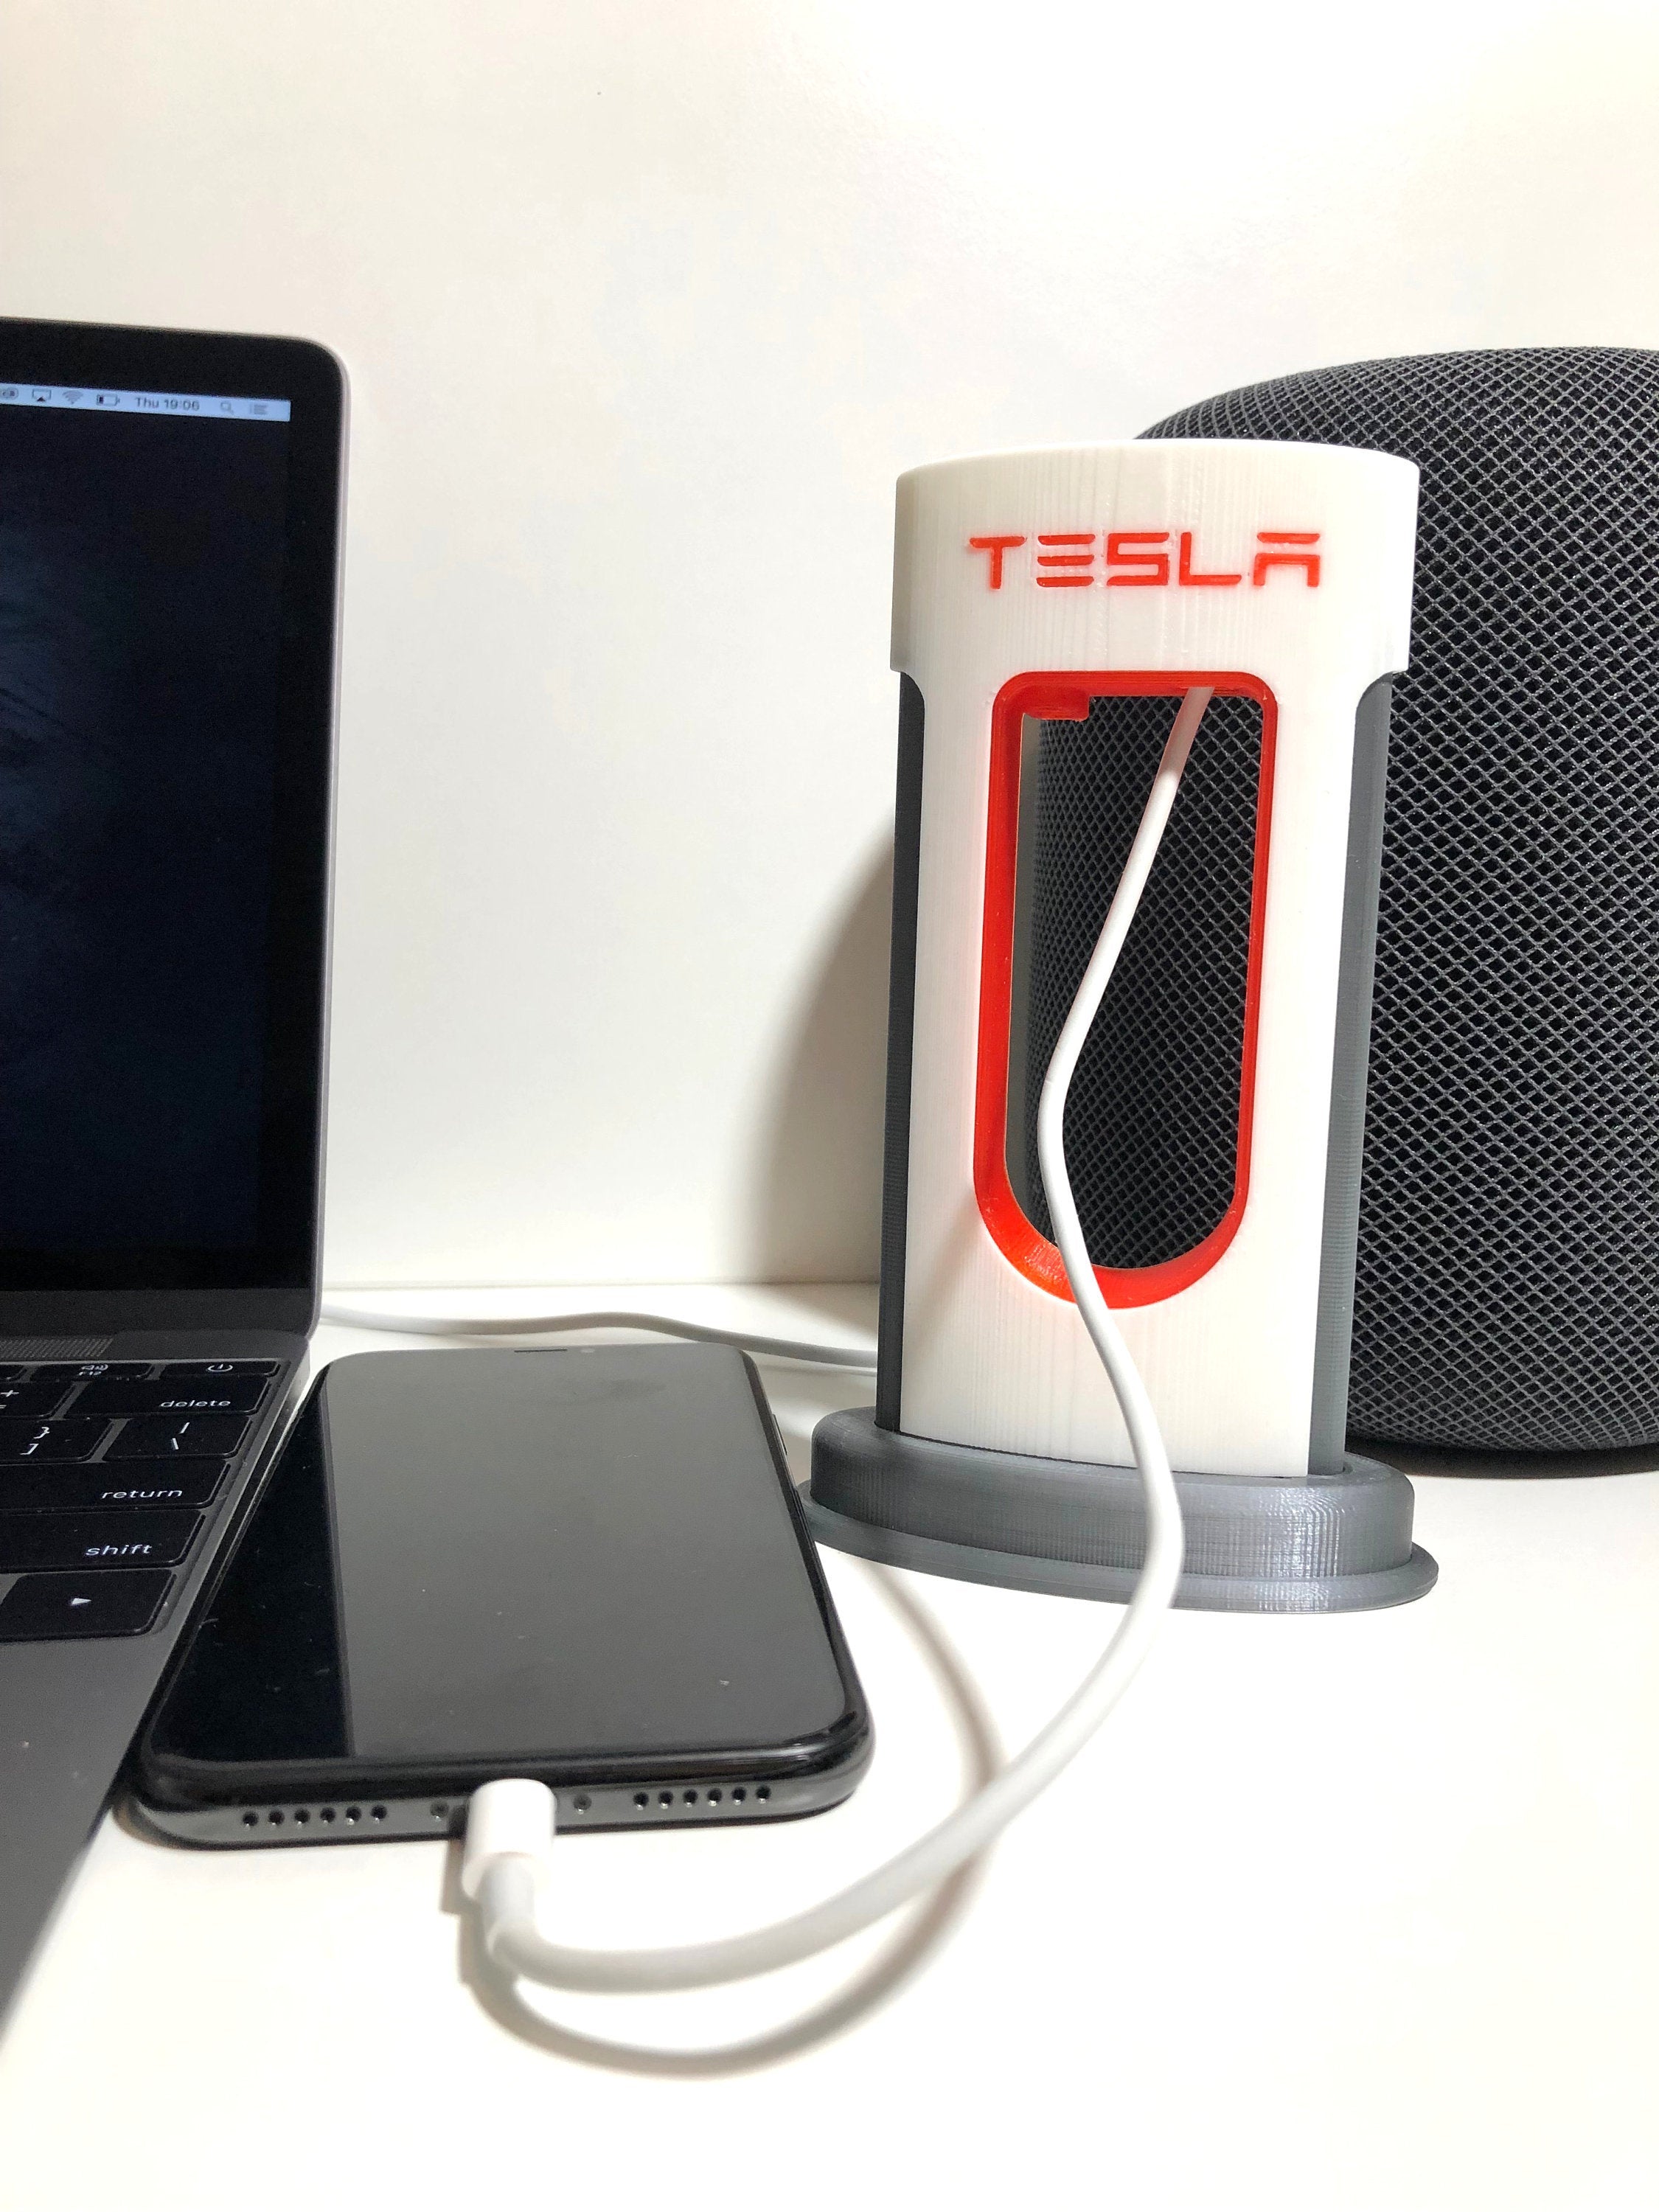 Tesla Supercharger 3D Printed - PLA